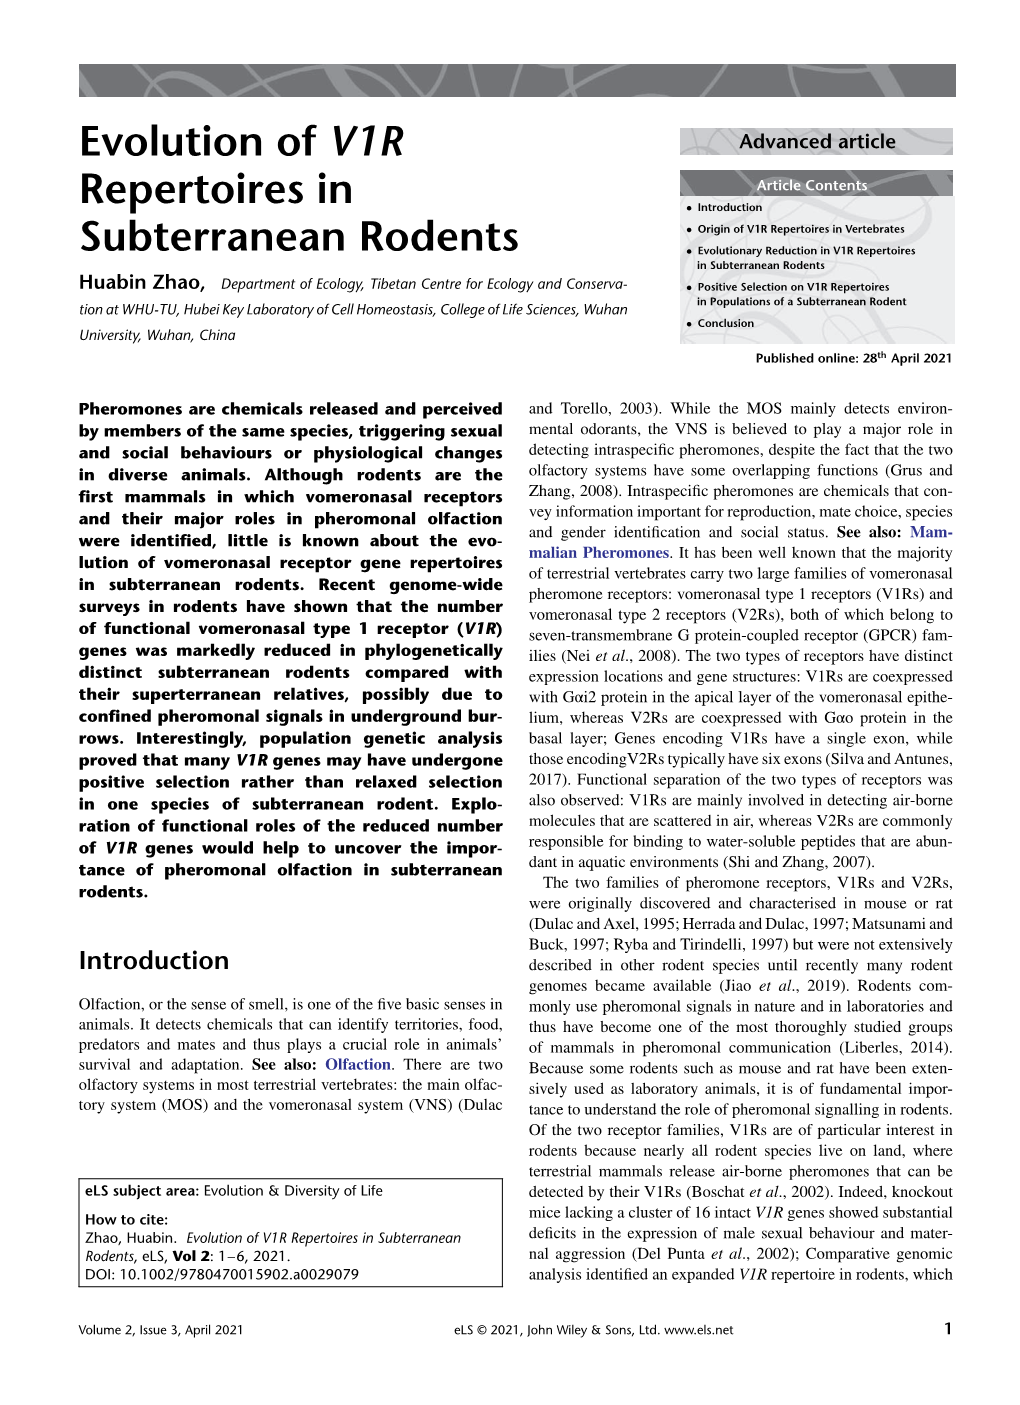 Evolution of V1R Repertoires in Subterranean Rodents